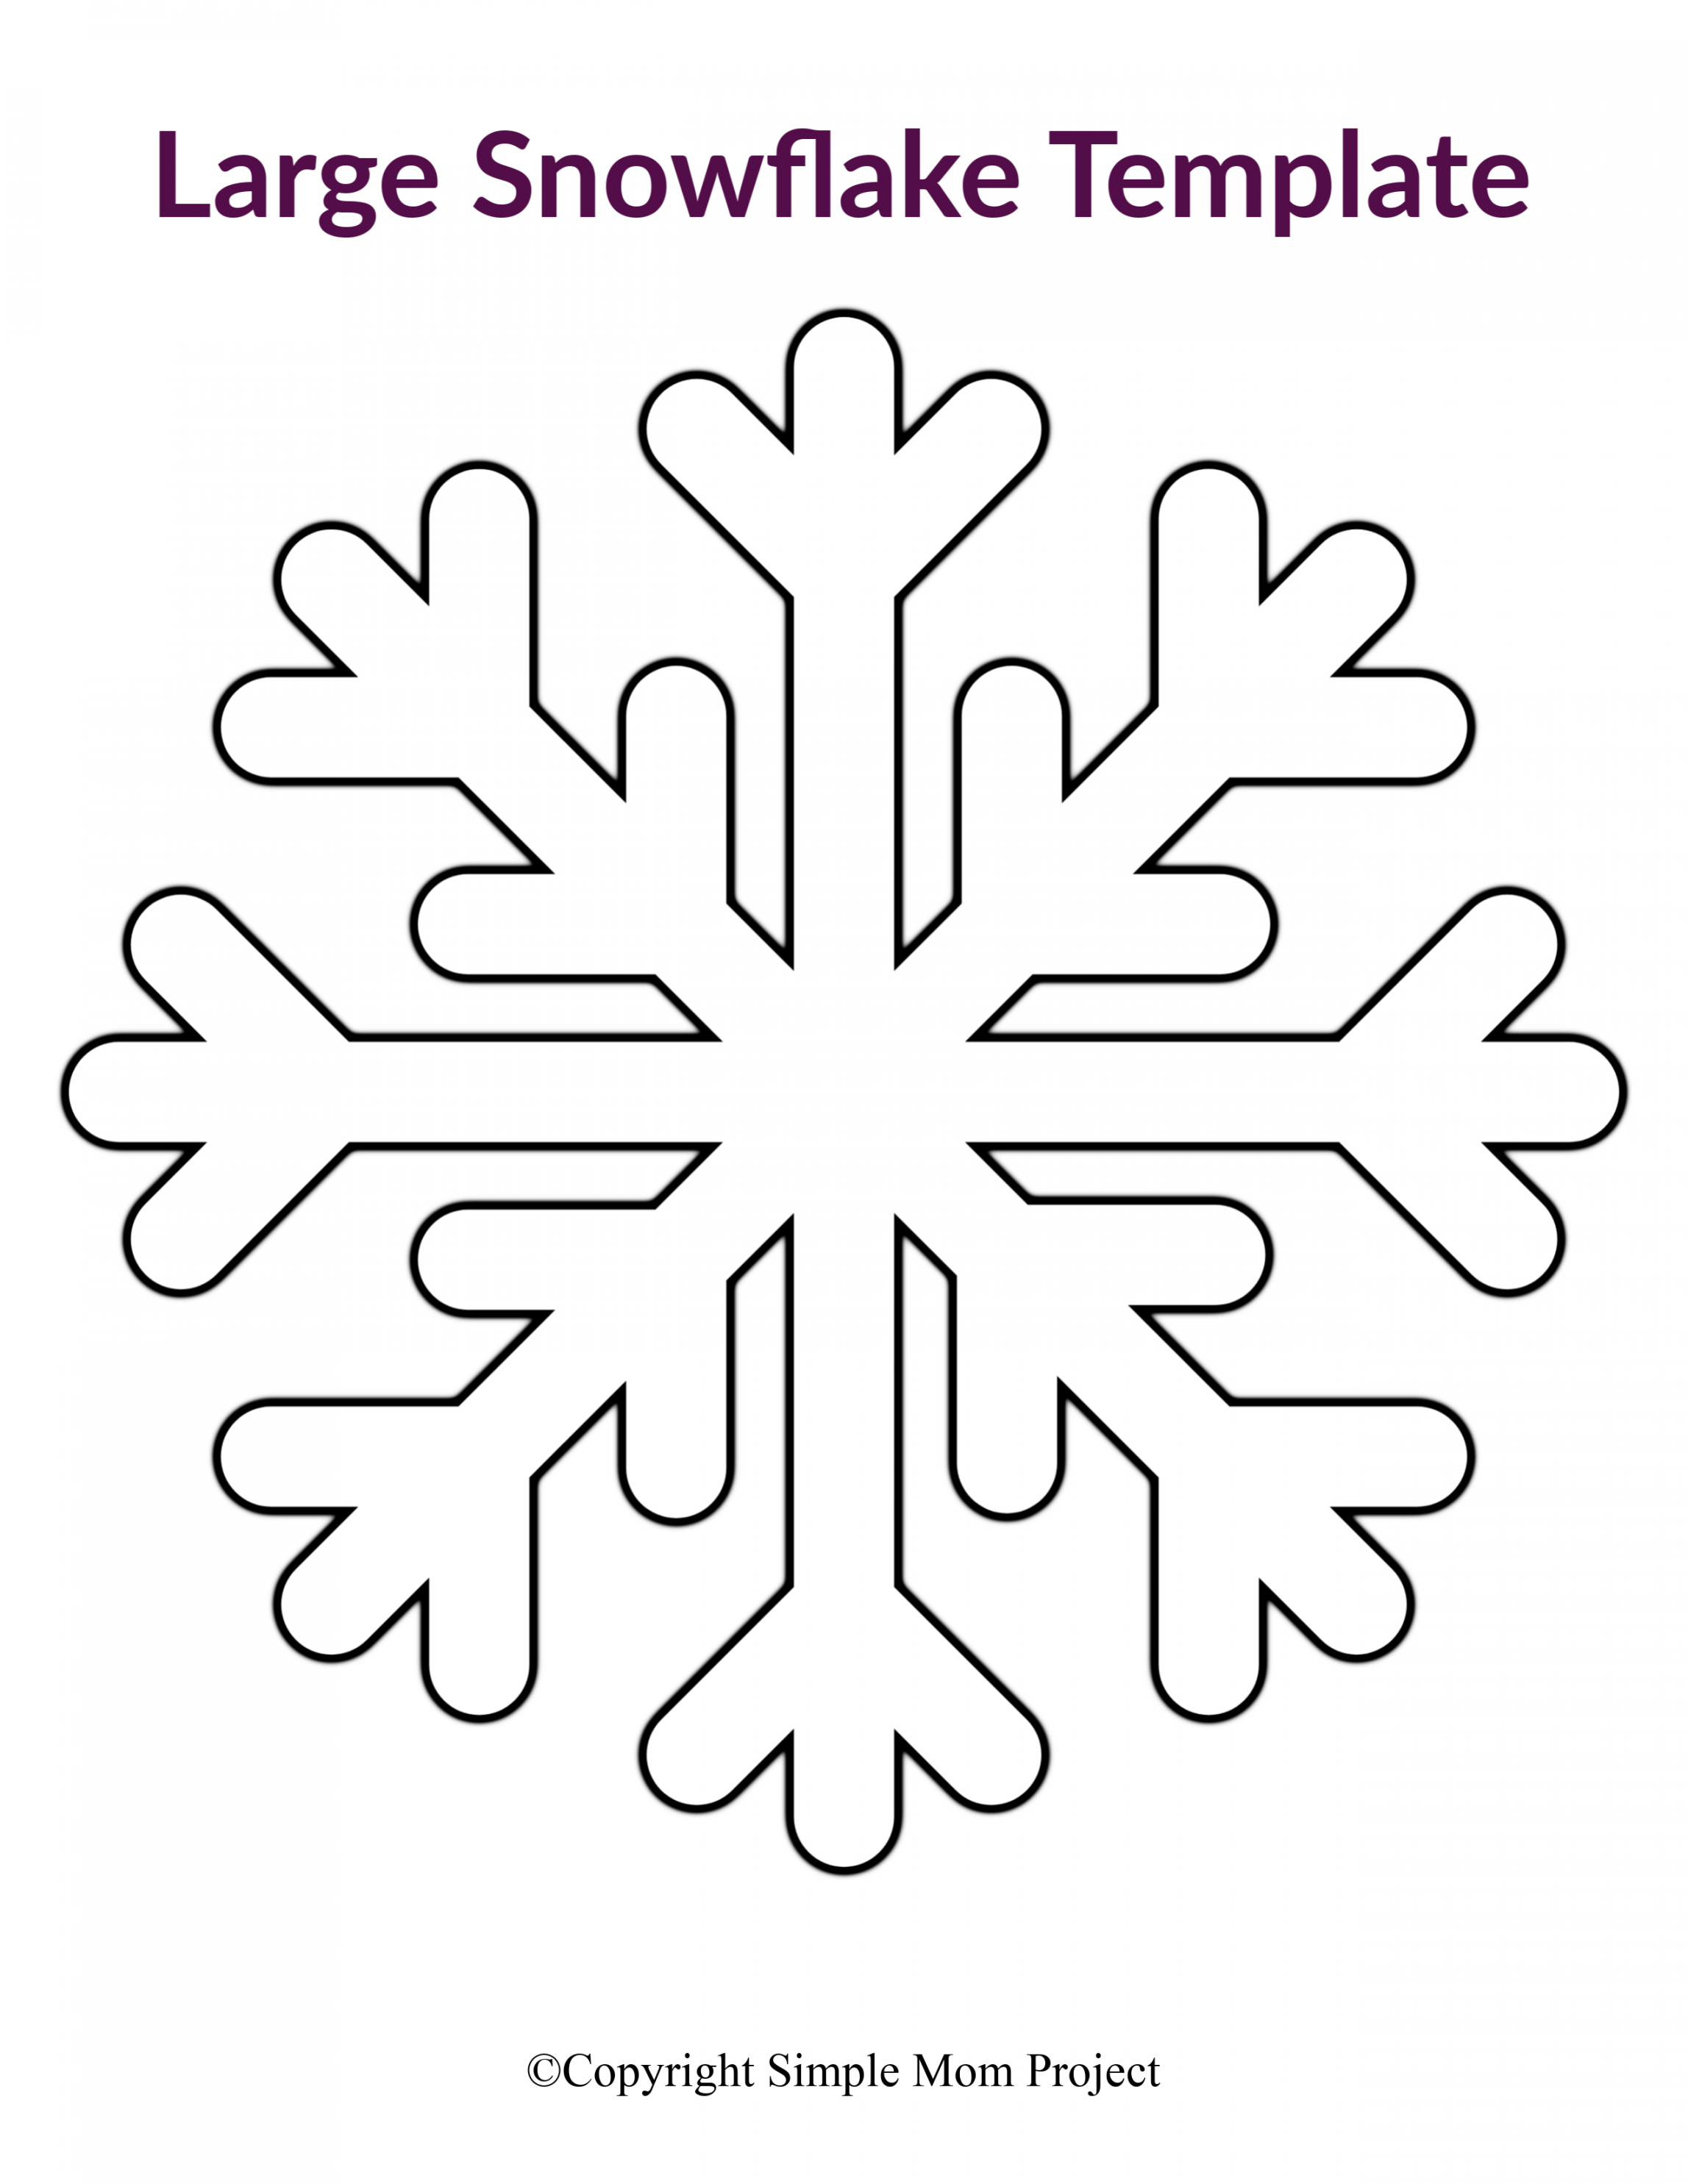 Free Printable Large Snowflake Templates - Simple Mom Project - FREE Printables - Free Snowflake Printables